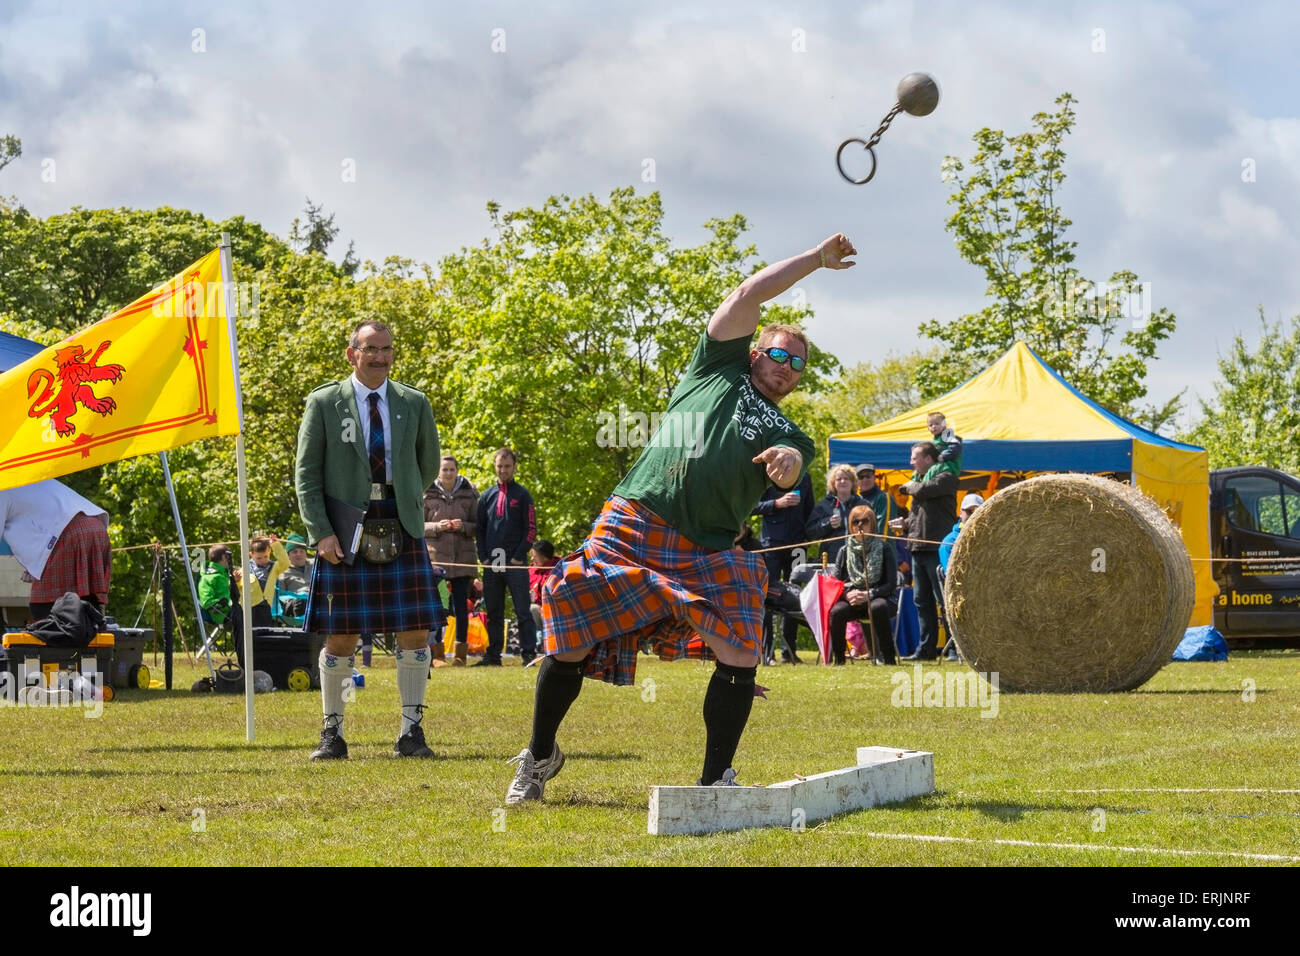 Competitor in the Carmunnock Highland games throwing the weight, Carmunnock, near Glasgow, Scotland, UK Stock Photo